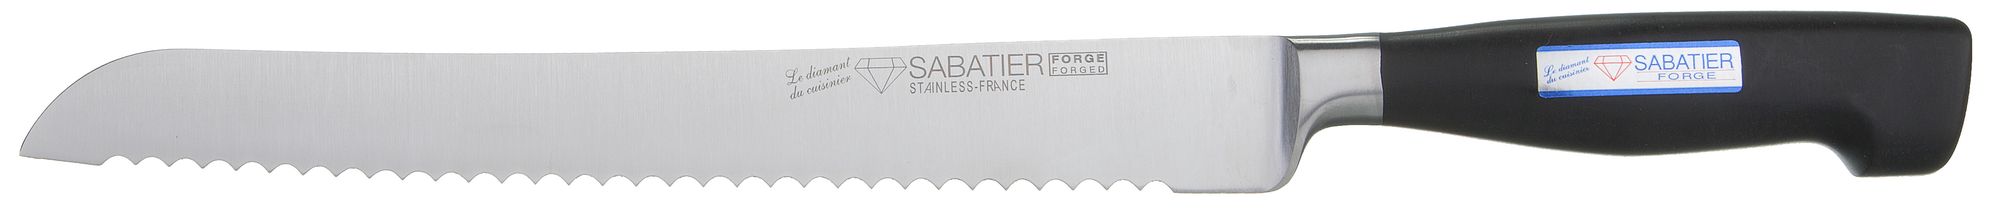 Diamant Sabatier Bread Knife Forge 22 cm